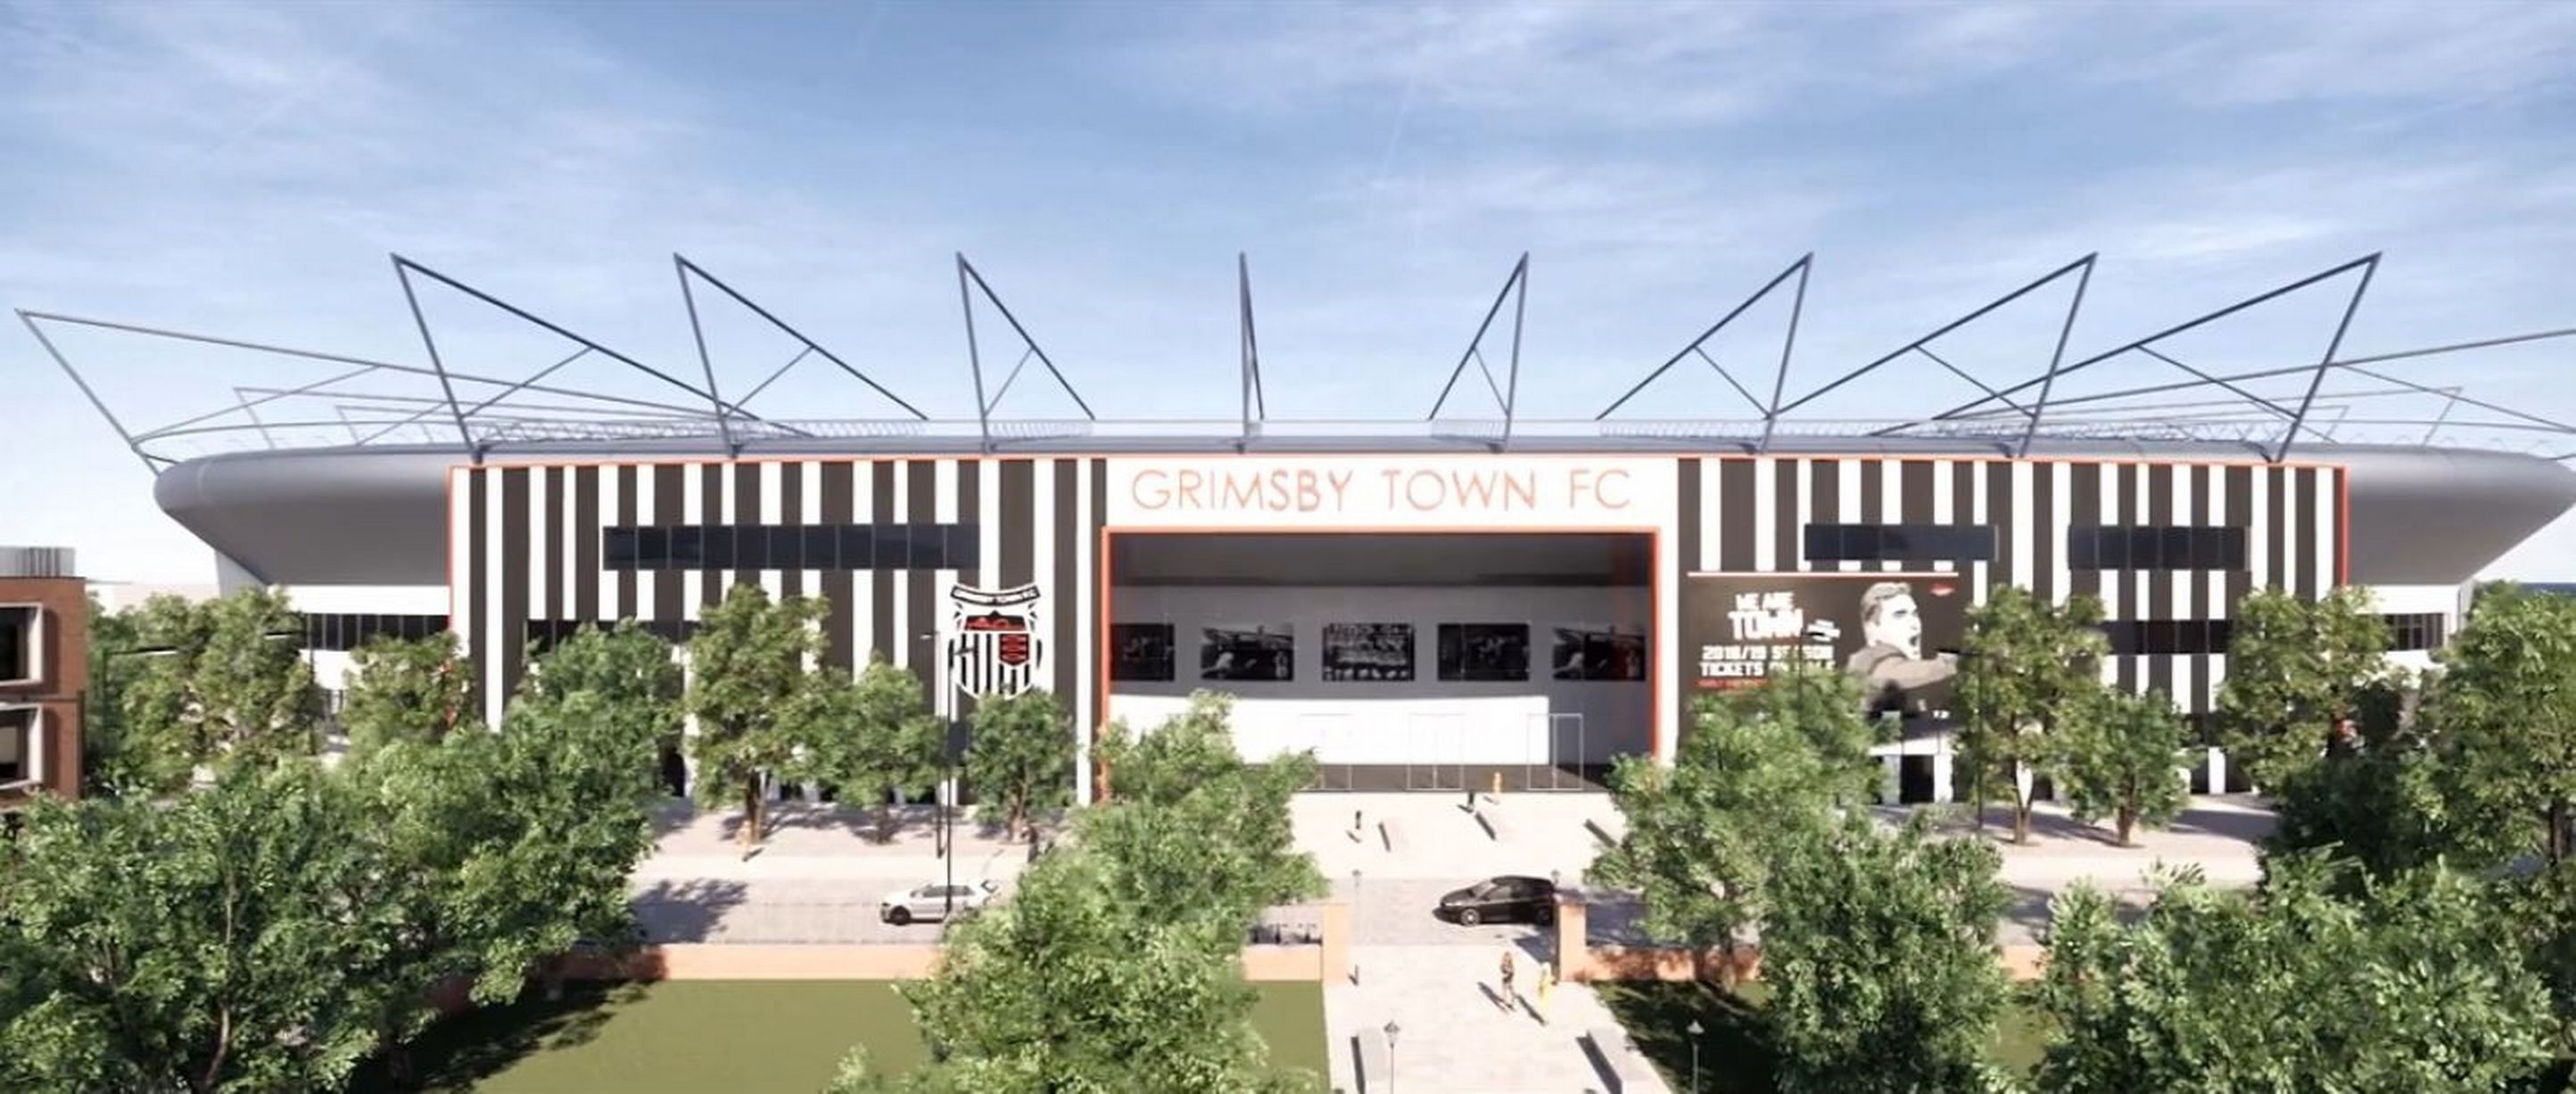 Grimsby Town Stadium